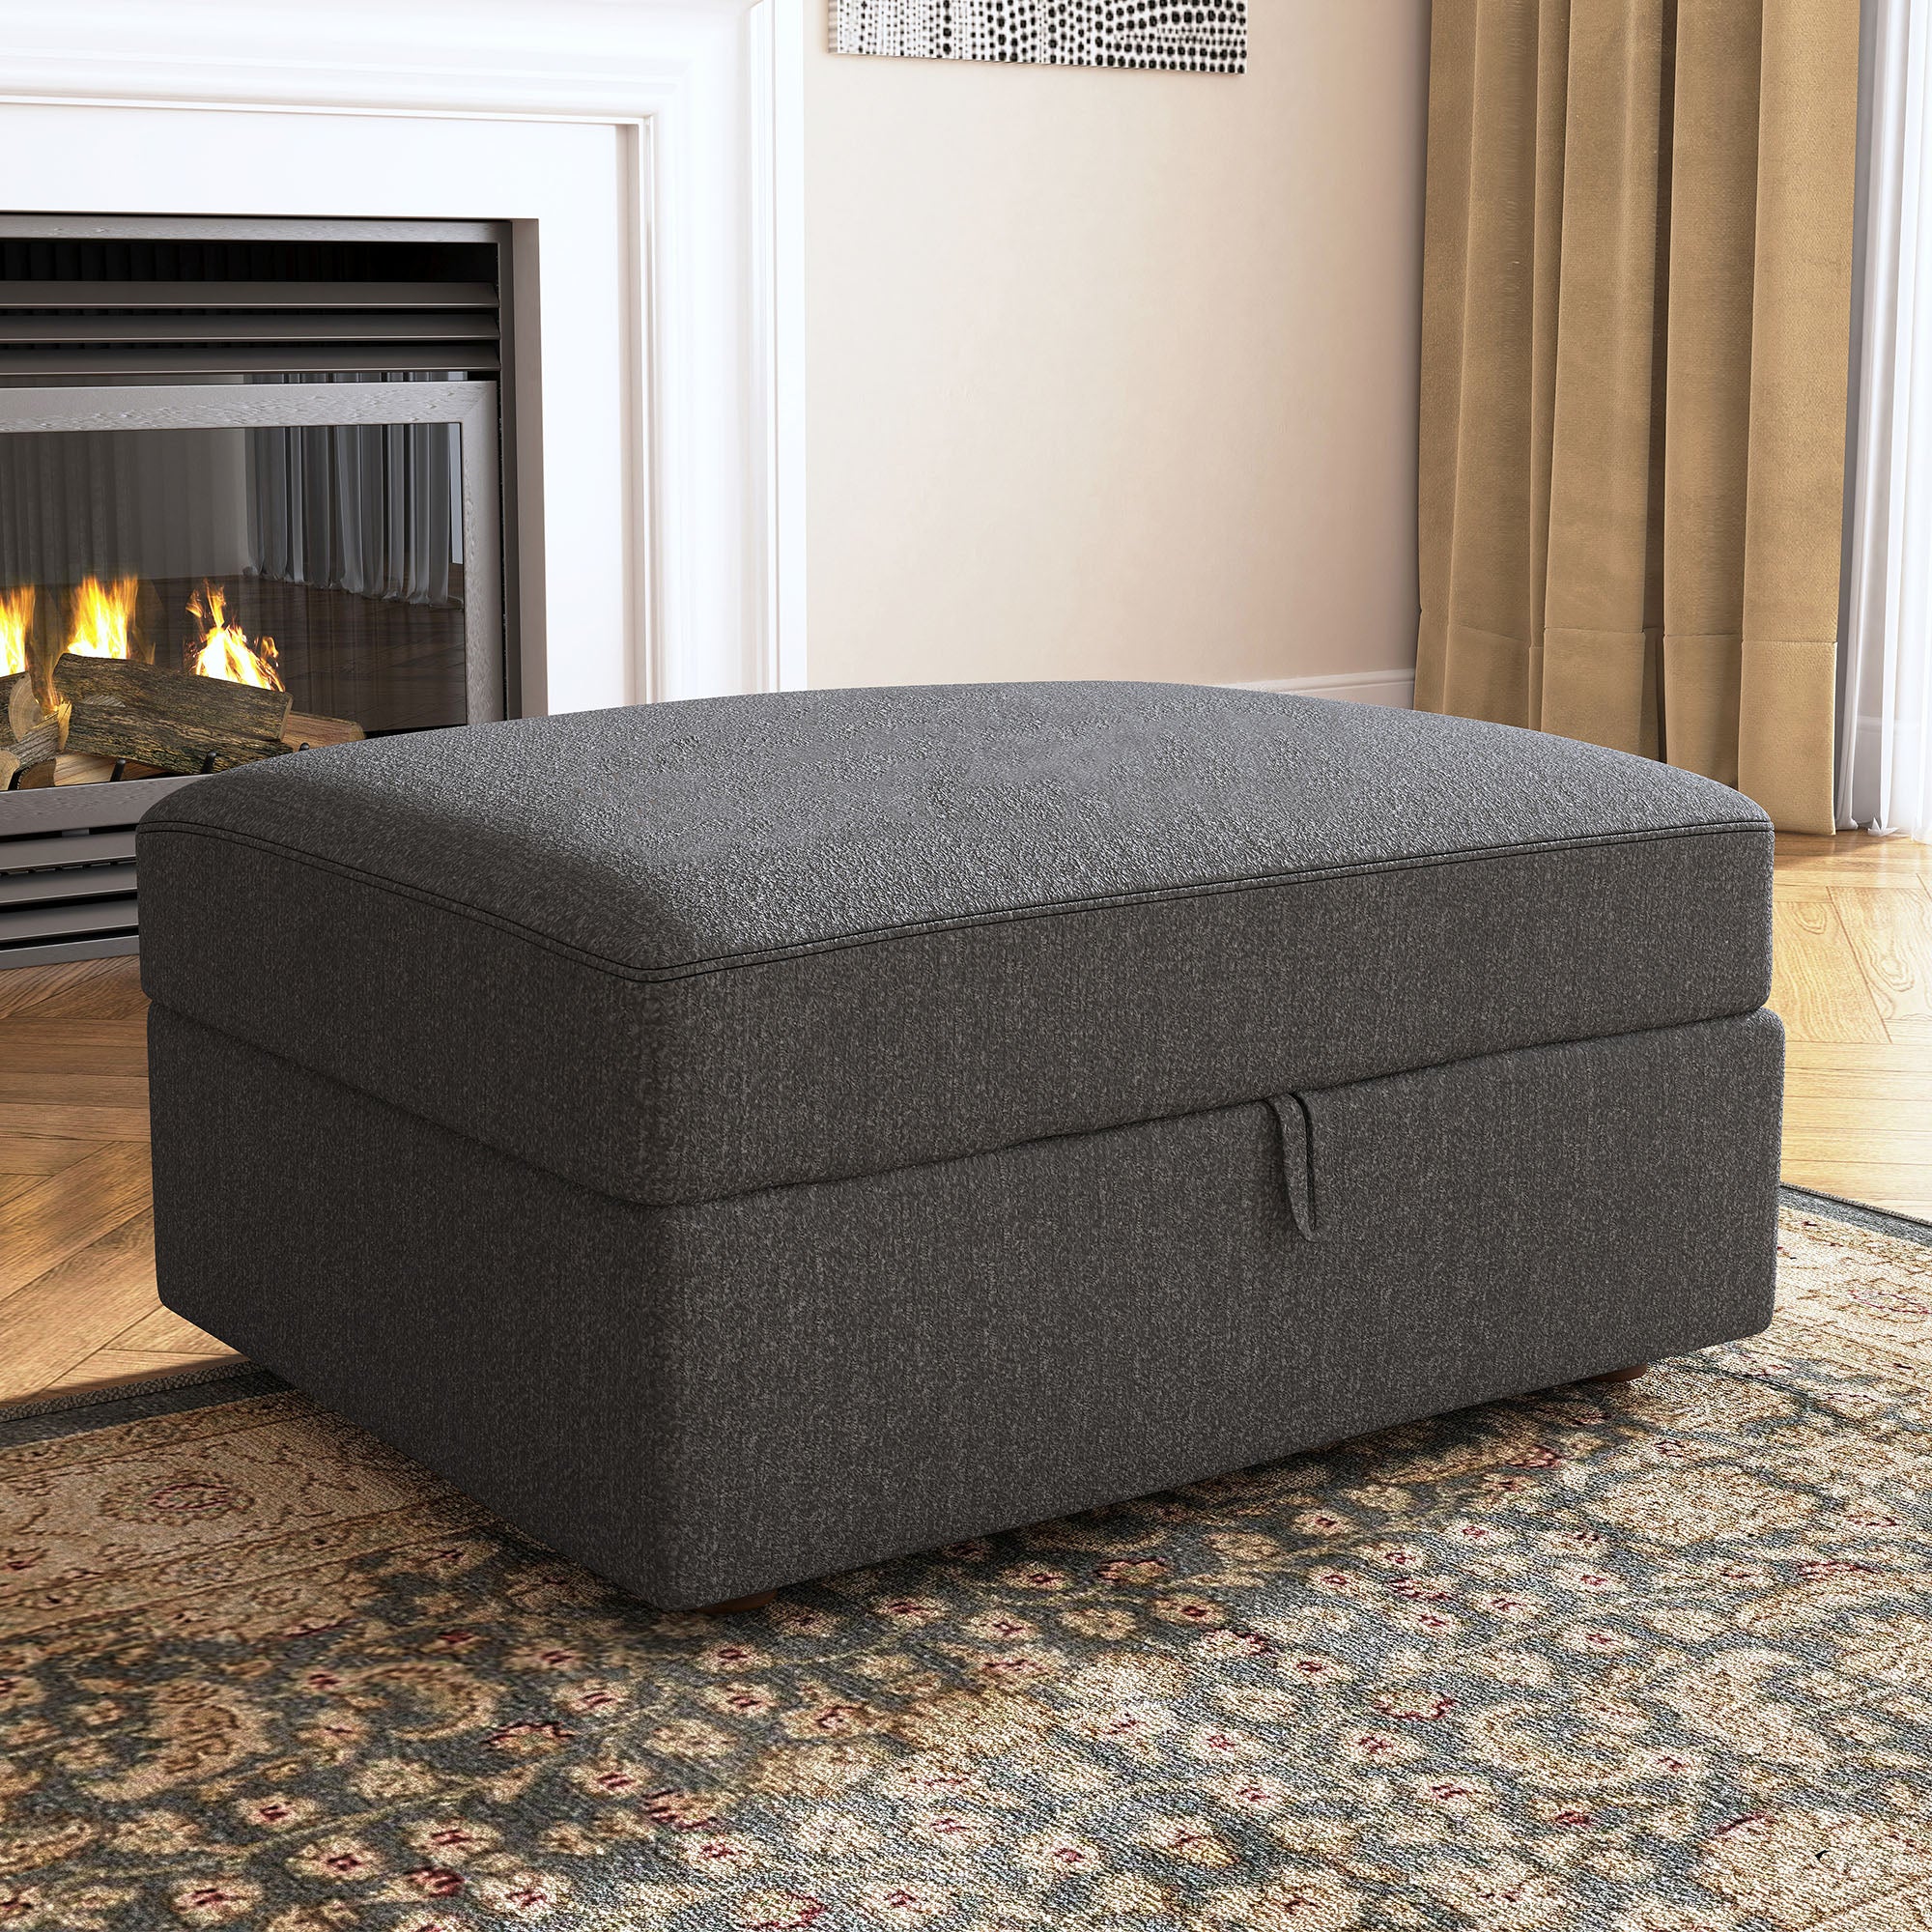 Storage Seat for HONBAY Fabric Modular Sectional Sofa